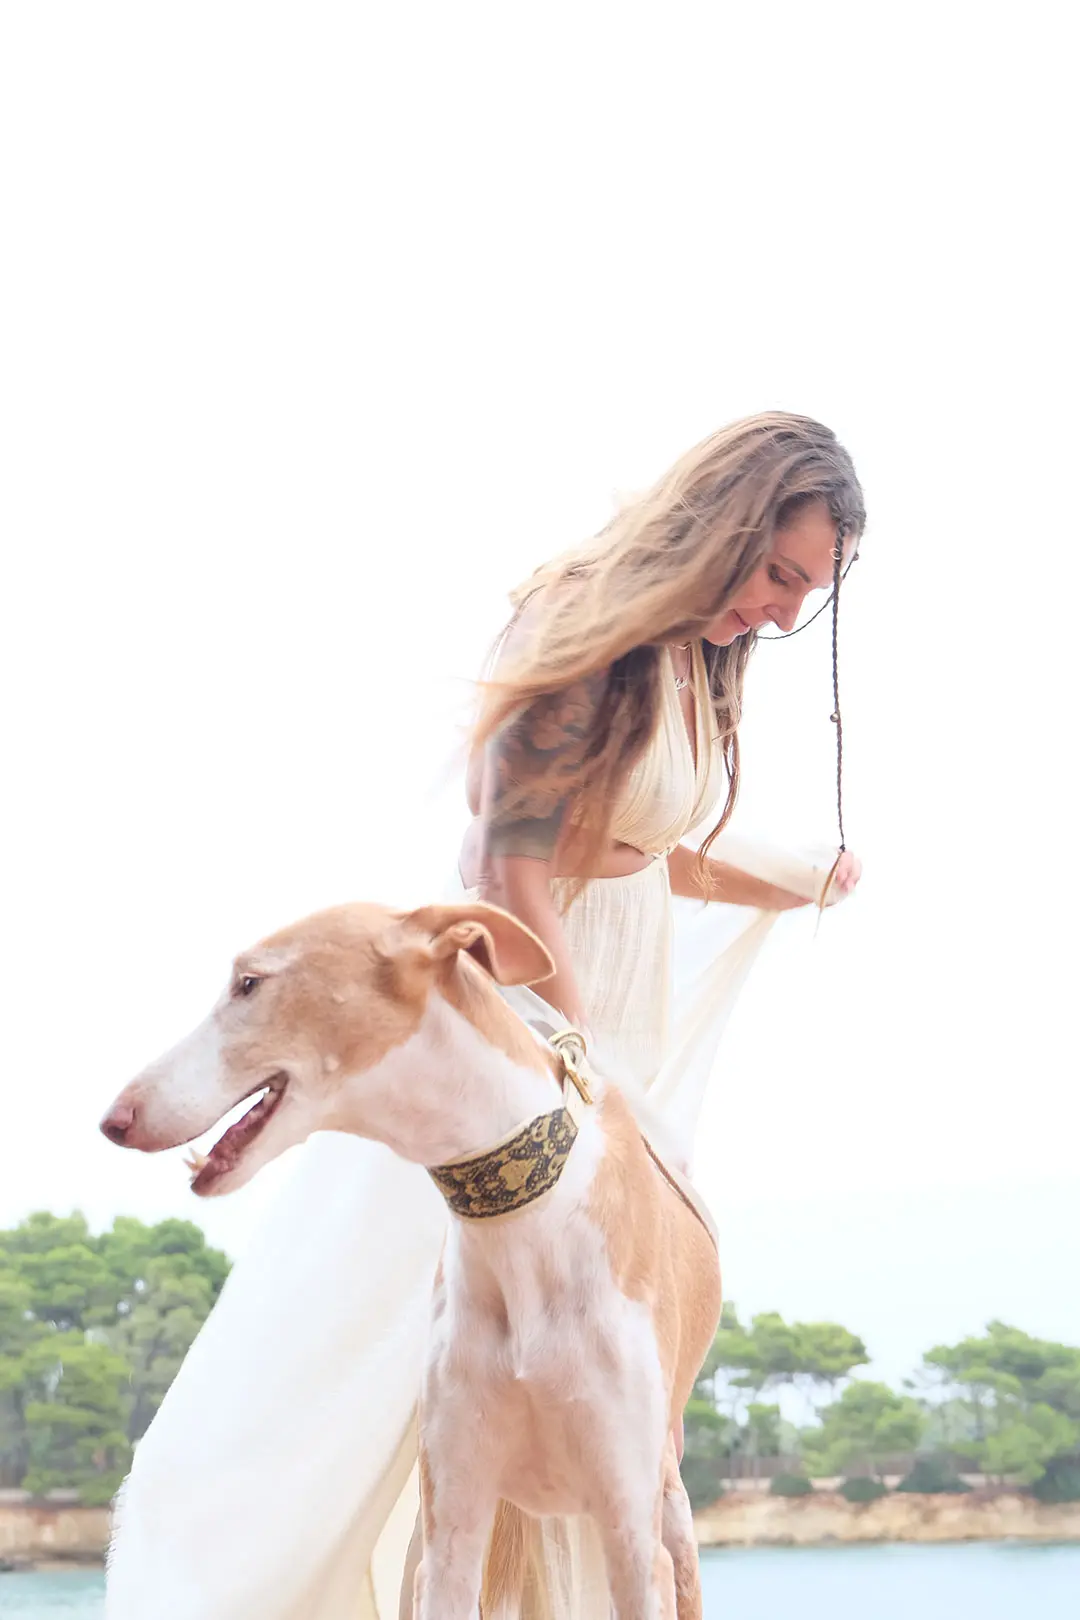 Boho Kleid Frau mit Hund